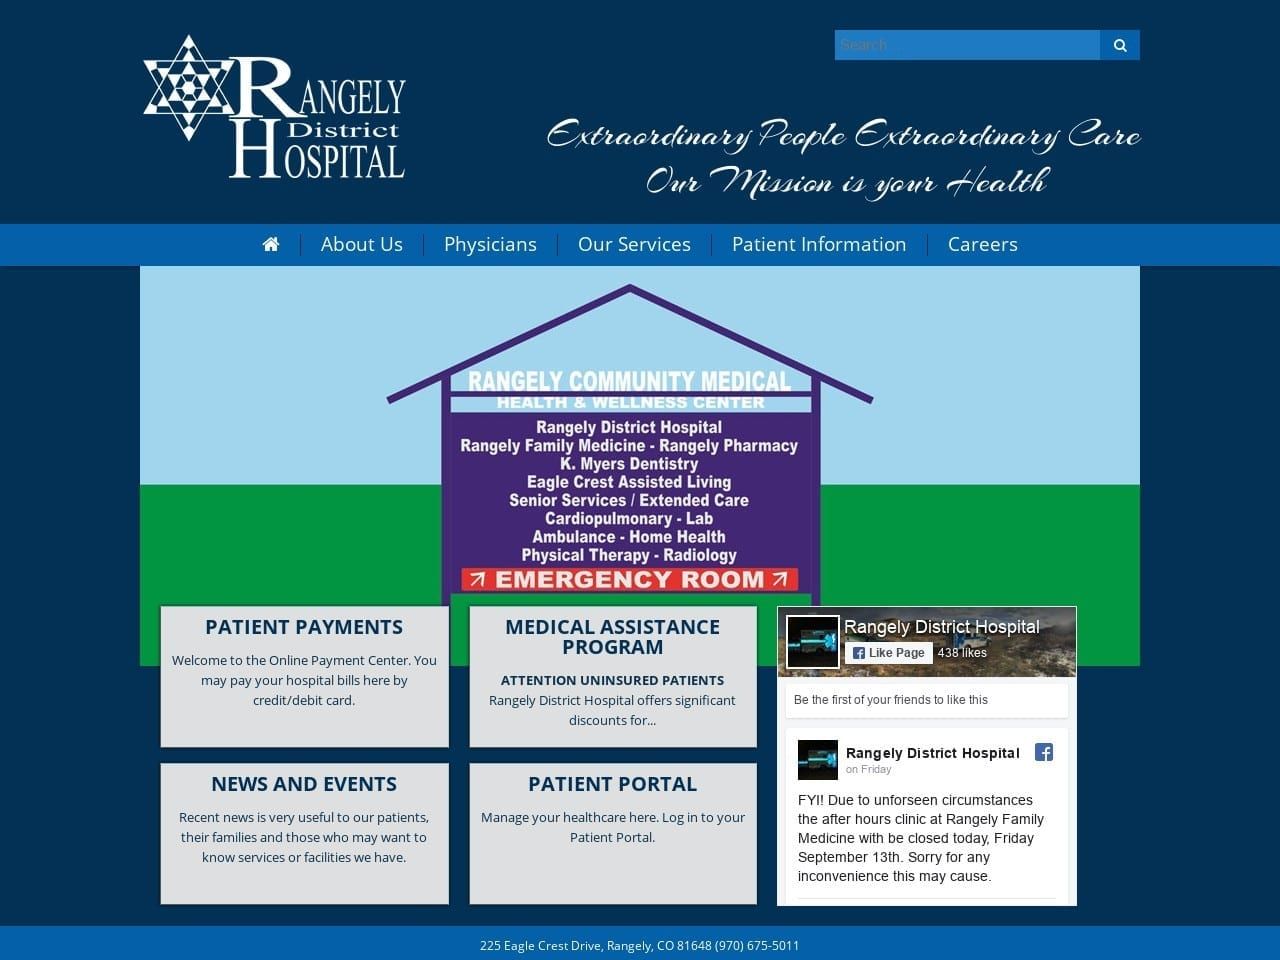 Rangely Family Medicine Website Screenshot from rangelyhospital.com